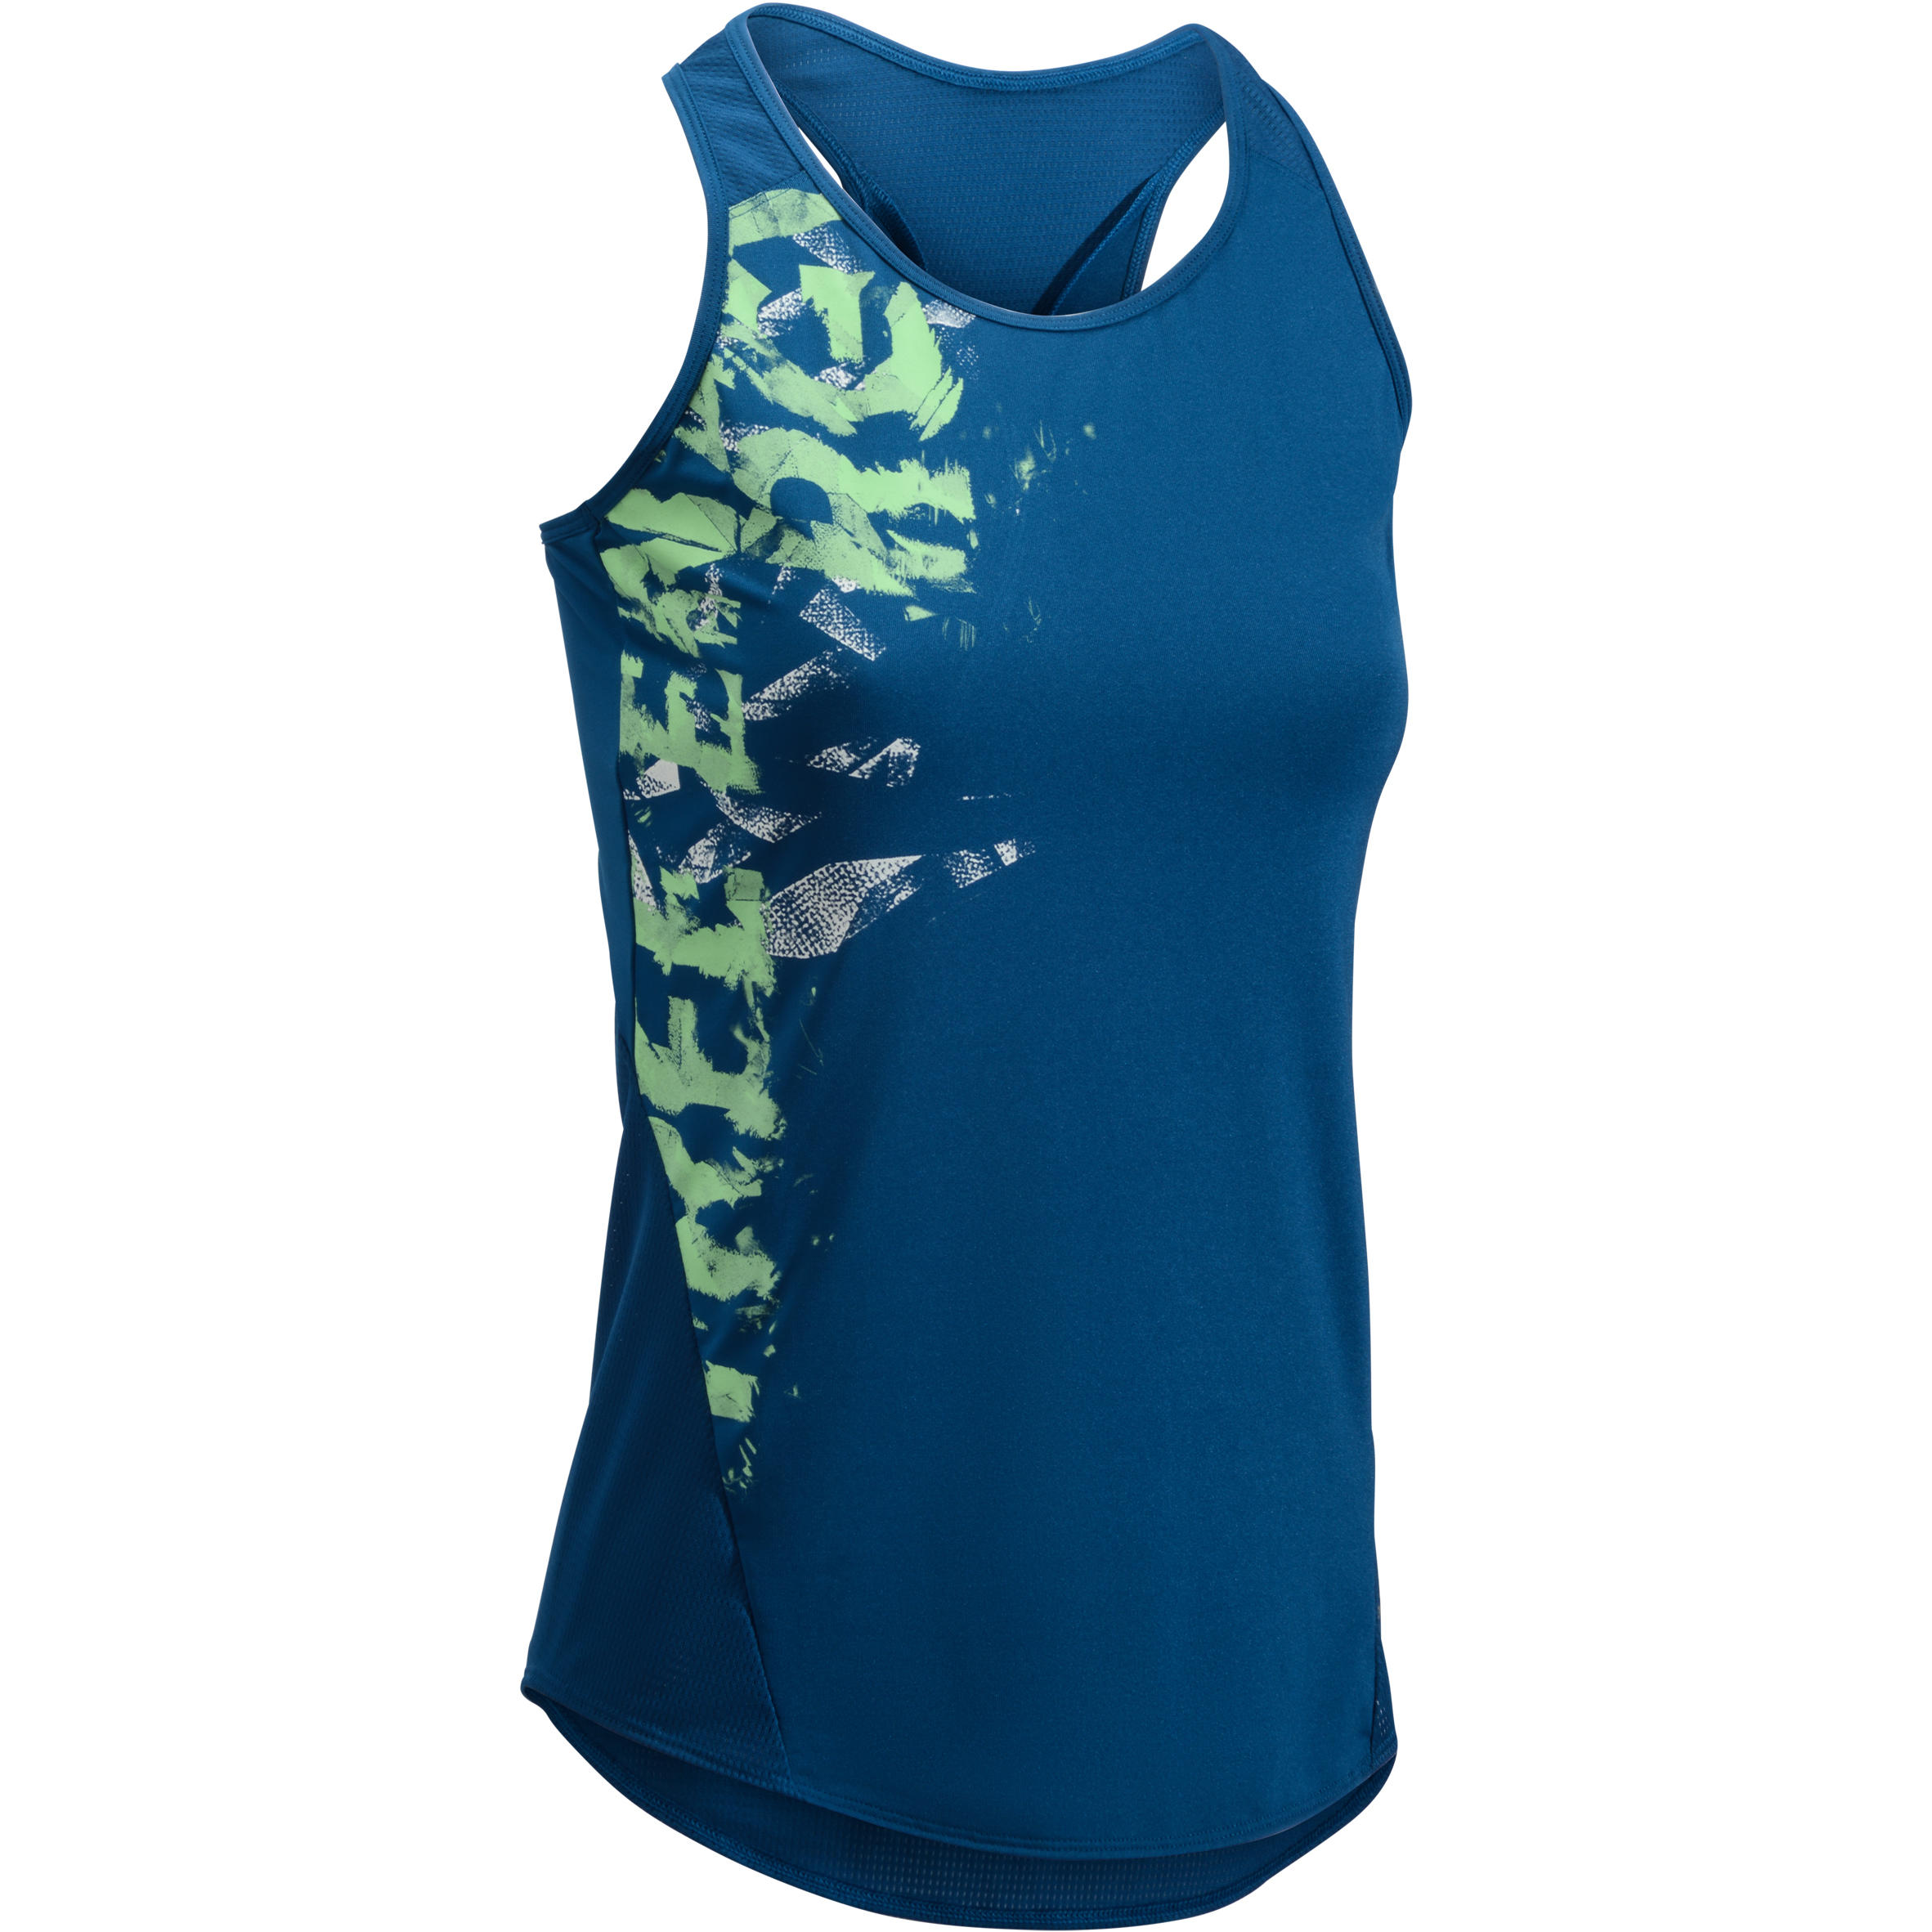 DOMYOS 120 Women's Cardio Fitness Tank Top - Blue Print